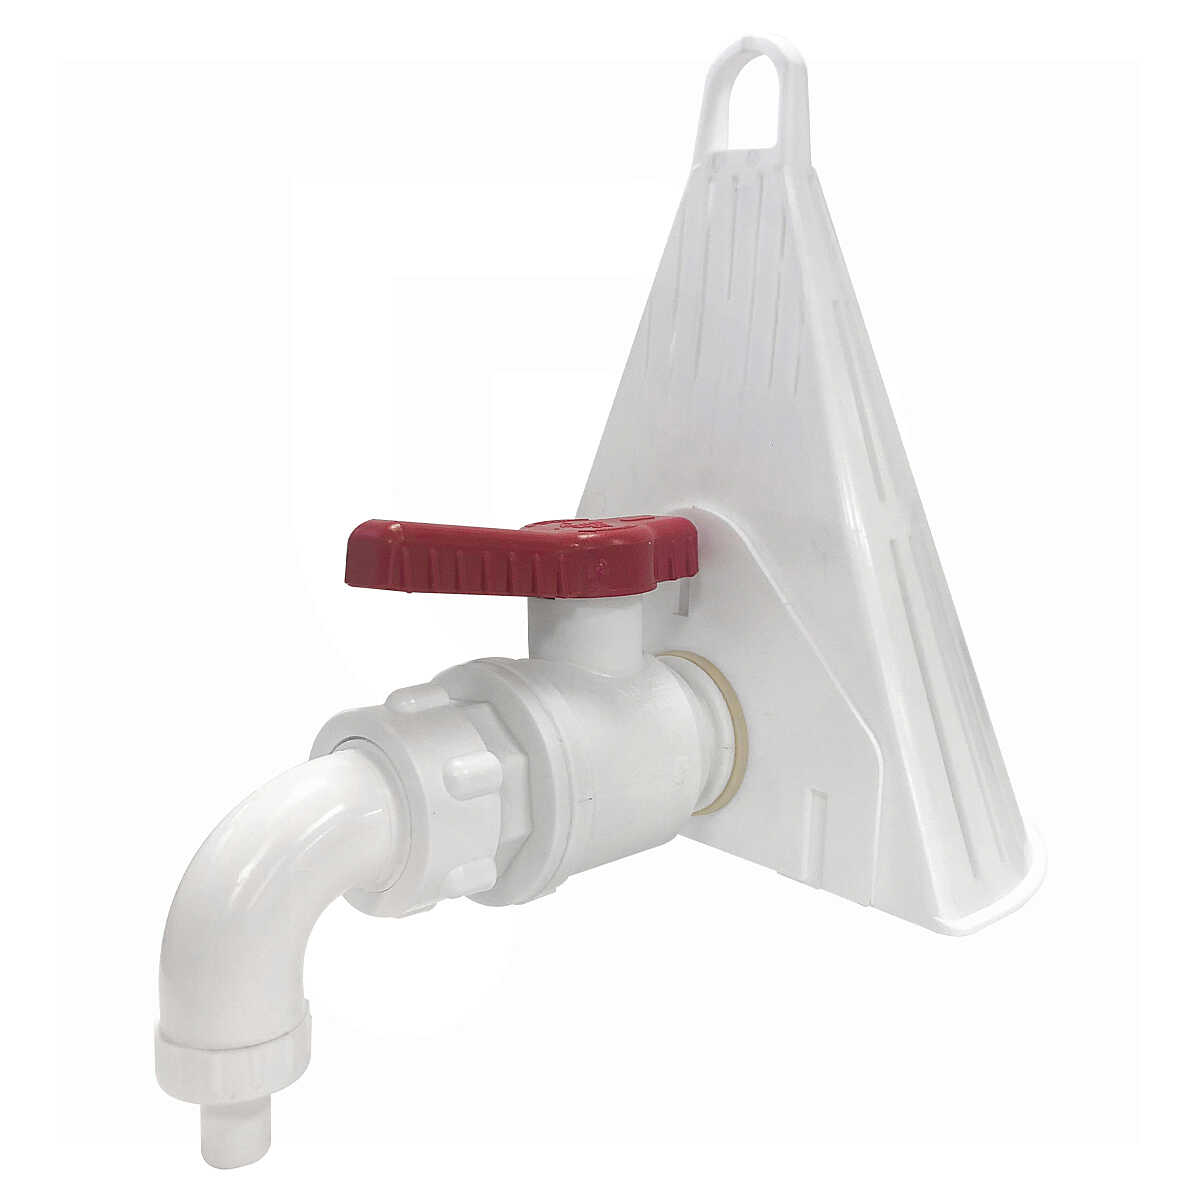 Filtro de agua para grifo BN5845 – Gem Supplies S.L.